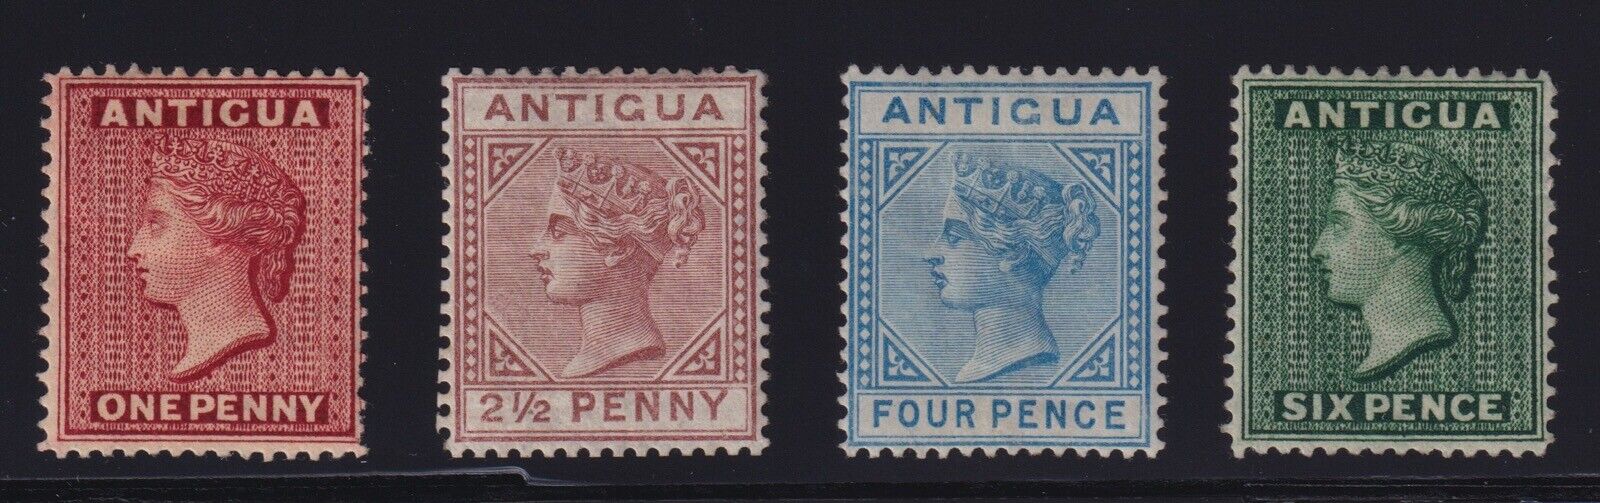 Antigua Sc #8-11 (1873-9) 1d Lake To 6d Blue Green Queen Victoria Mint H